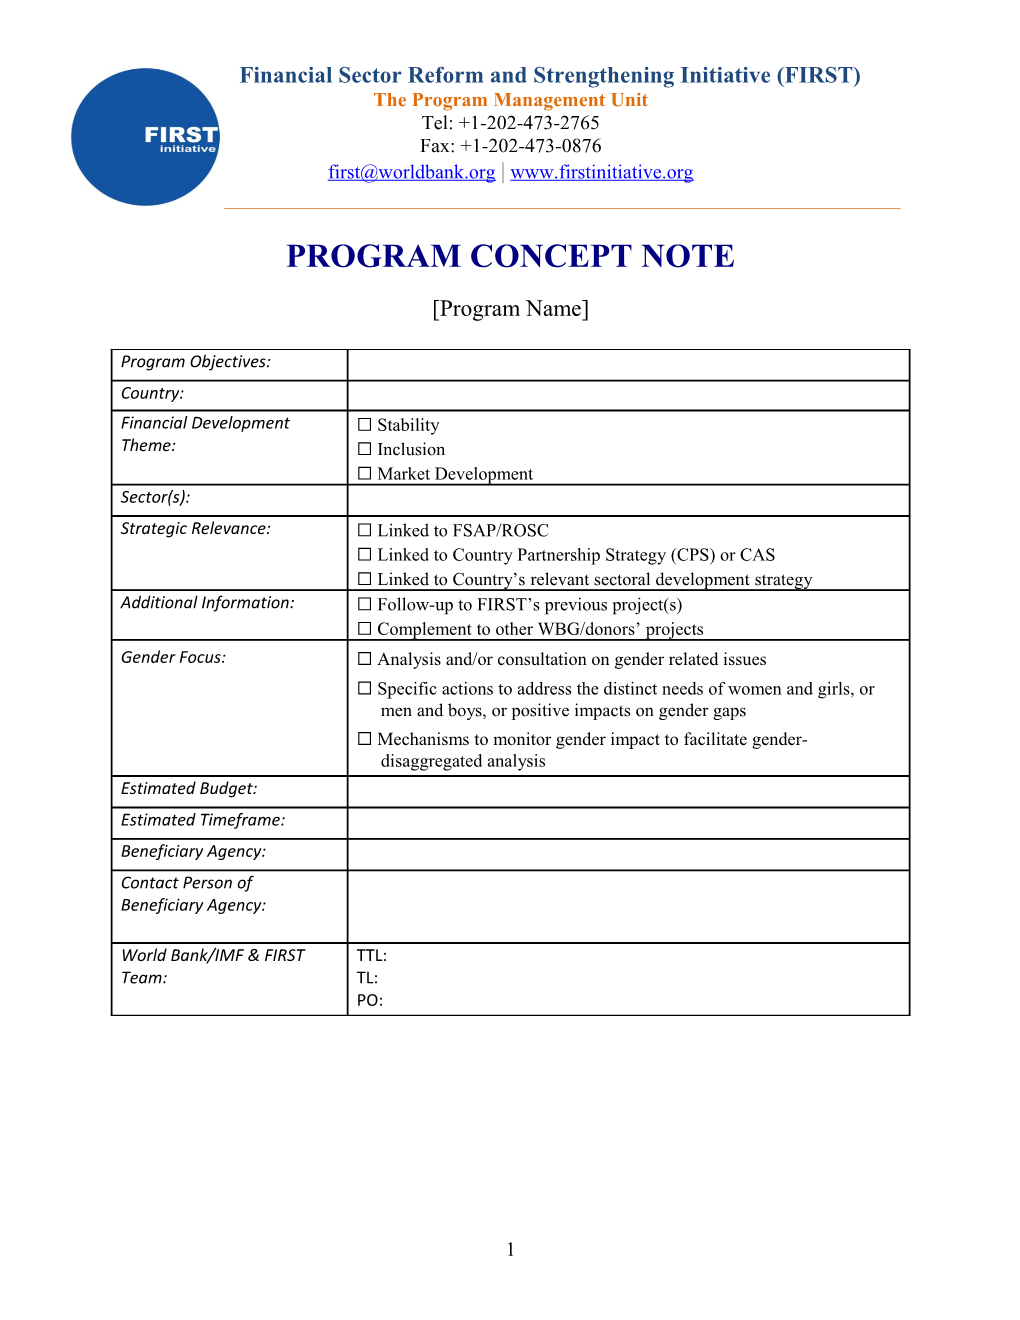 Program Concept Note